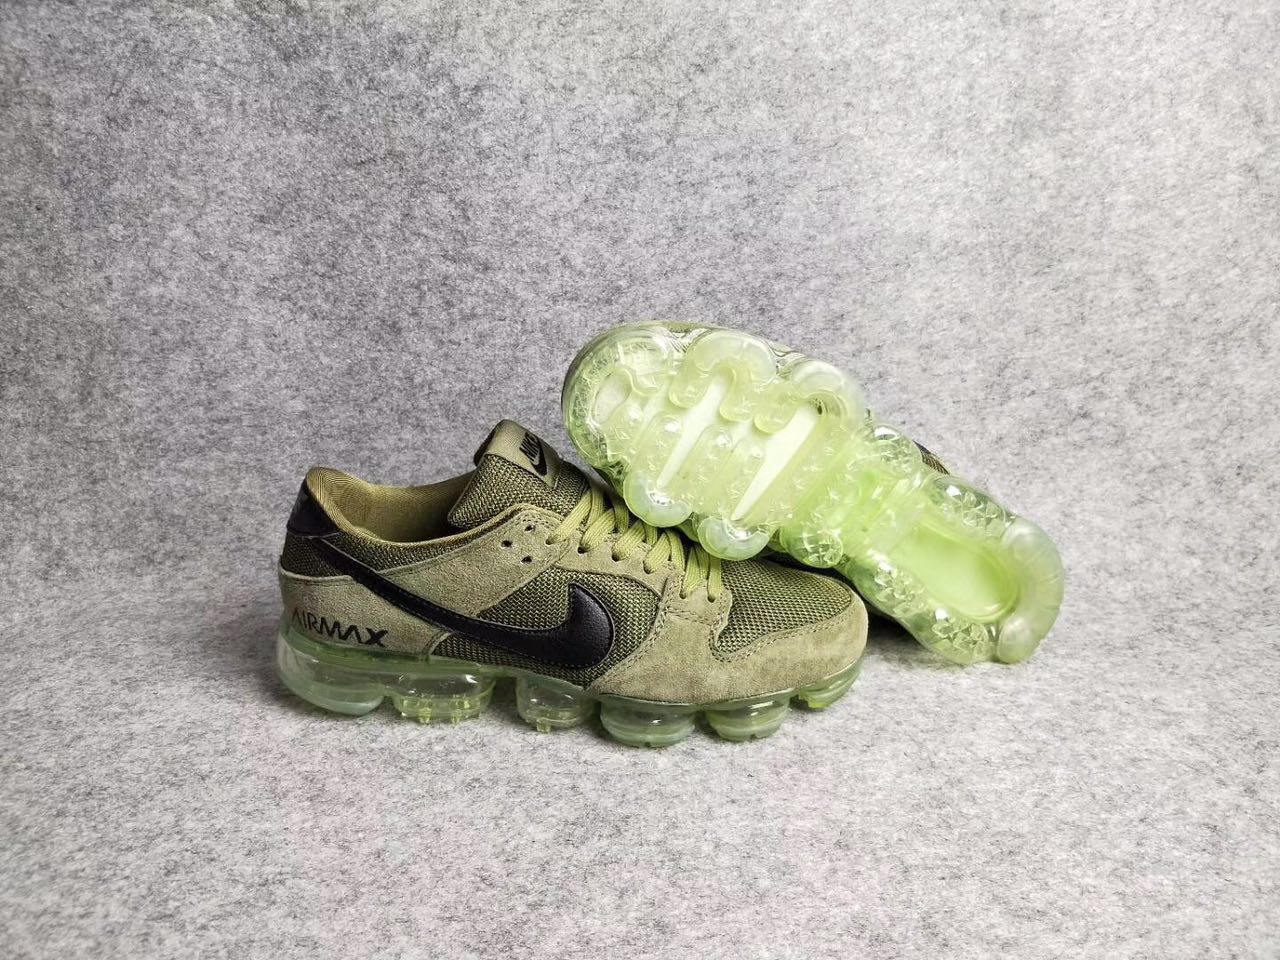 New Nike Air Max 2018 Army Green Black Shoes - Click Image to Close